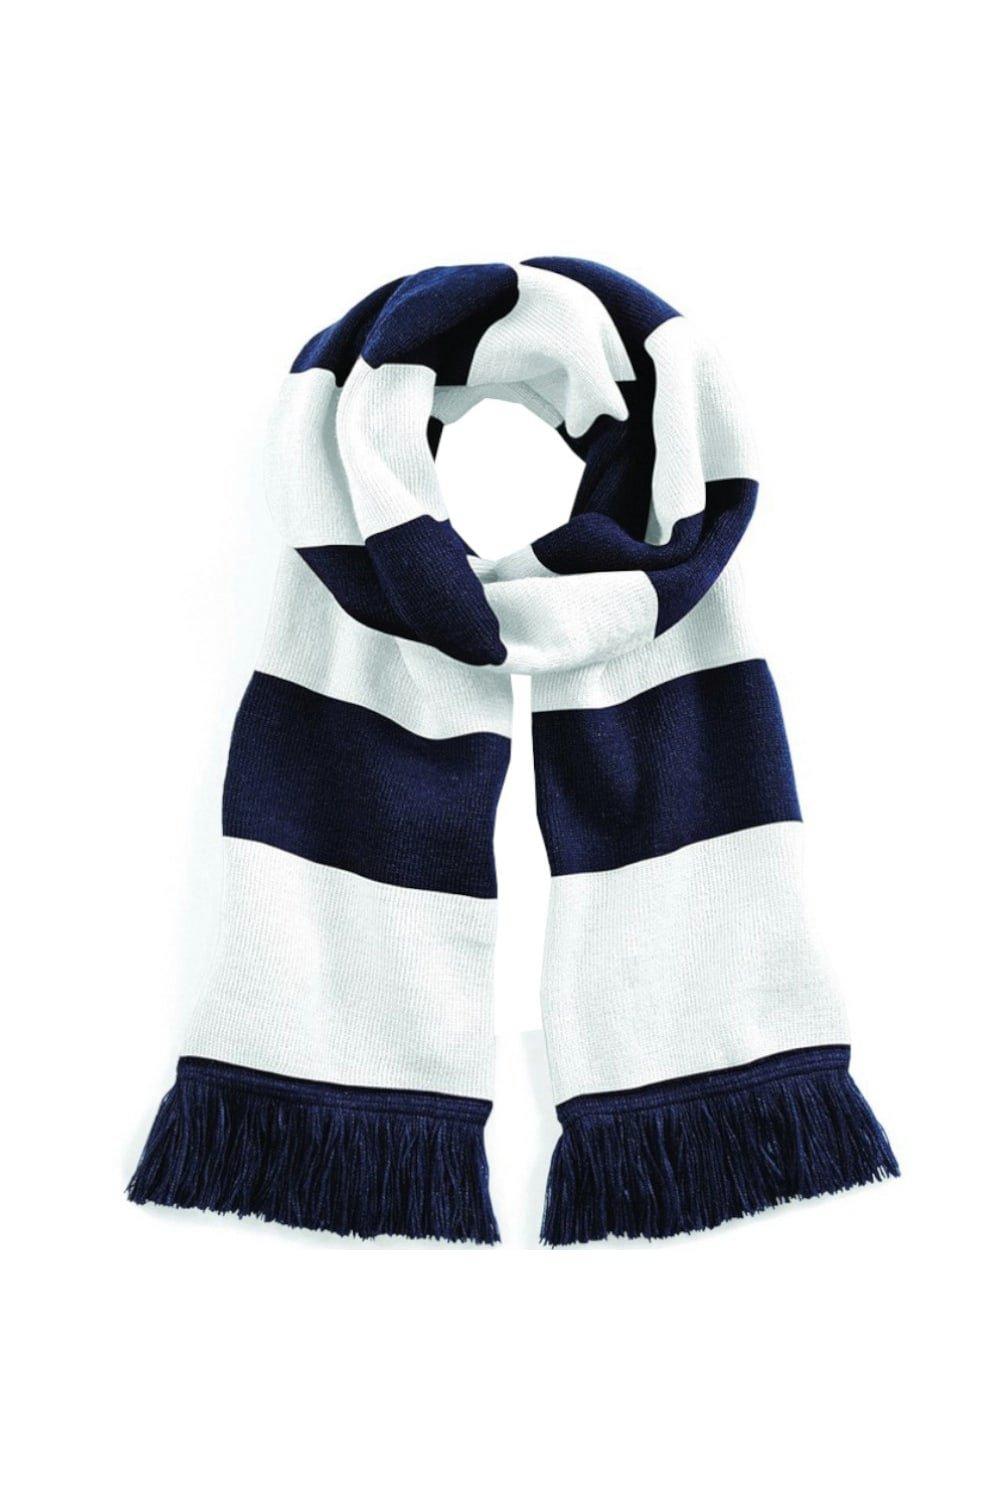 цена Университетский зимний шарф (двухслойный трикотаж) Beechfield, темно-синий